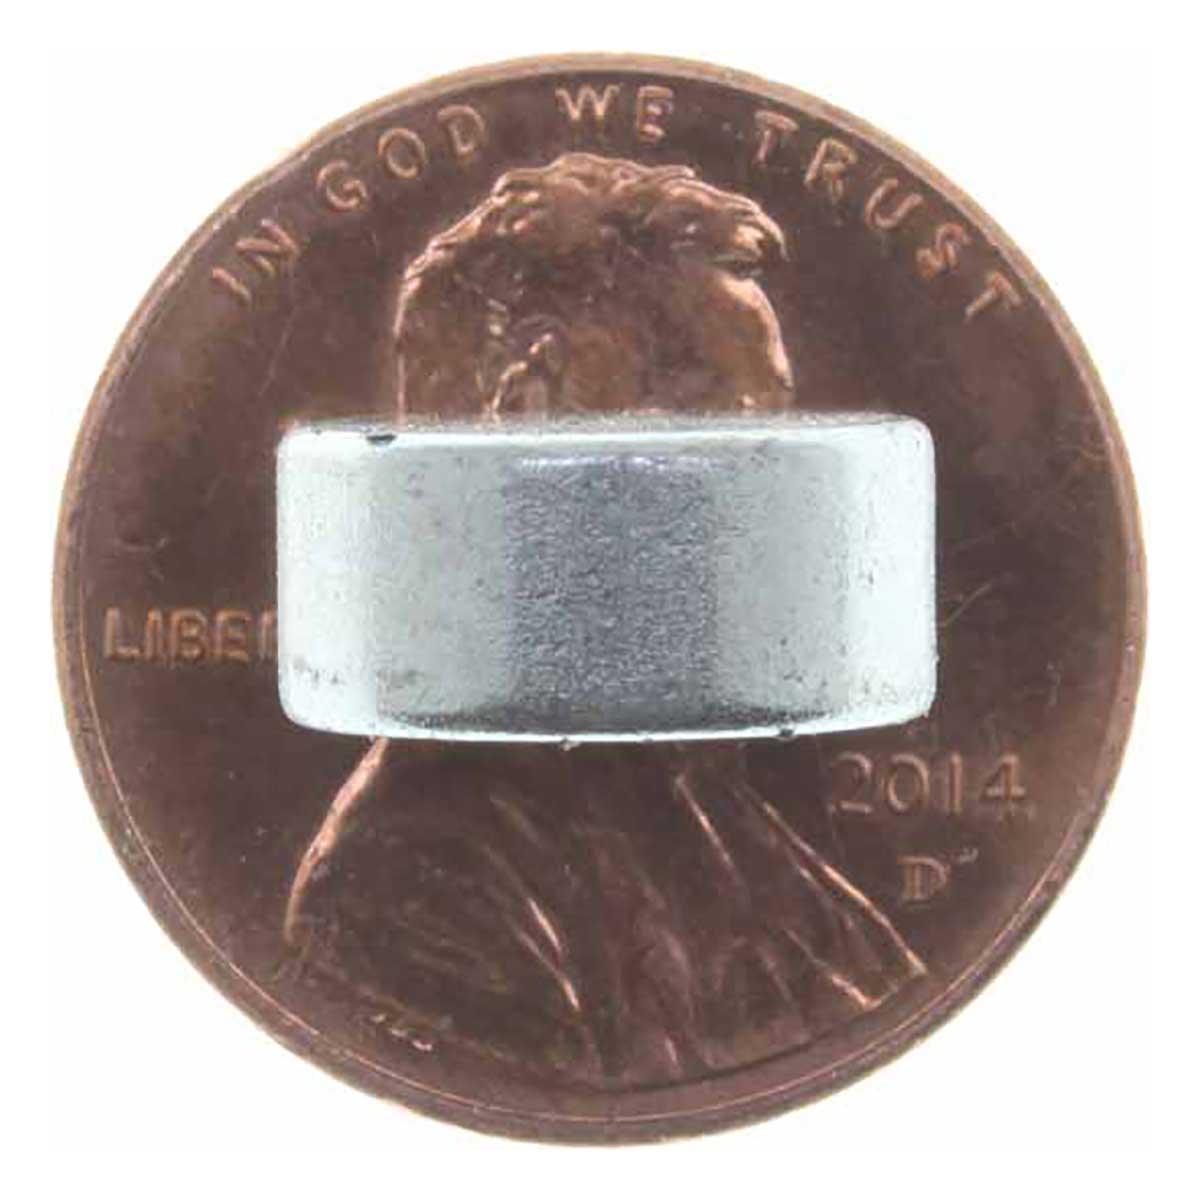 Rare Earth Magnets - 5 pound - 3pc